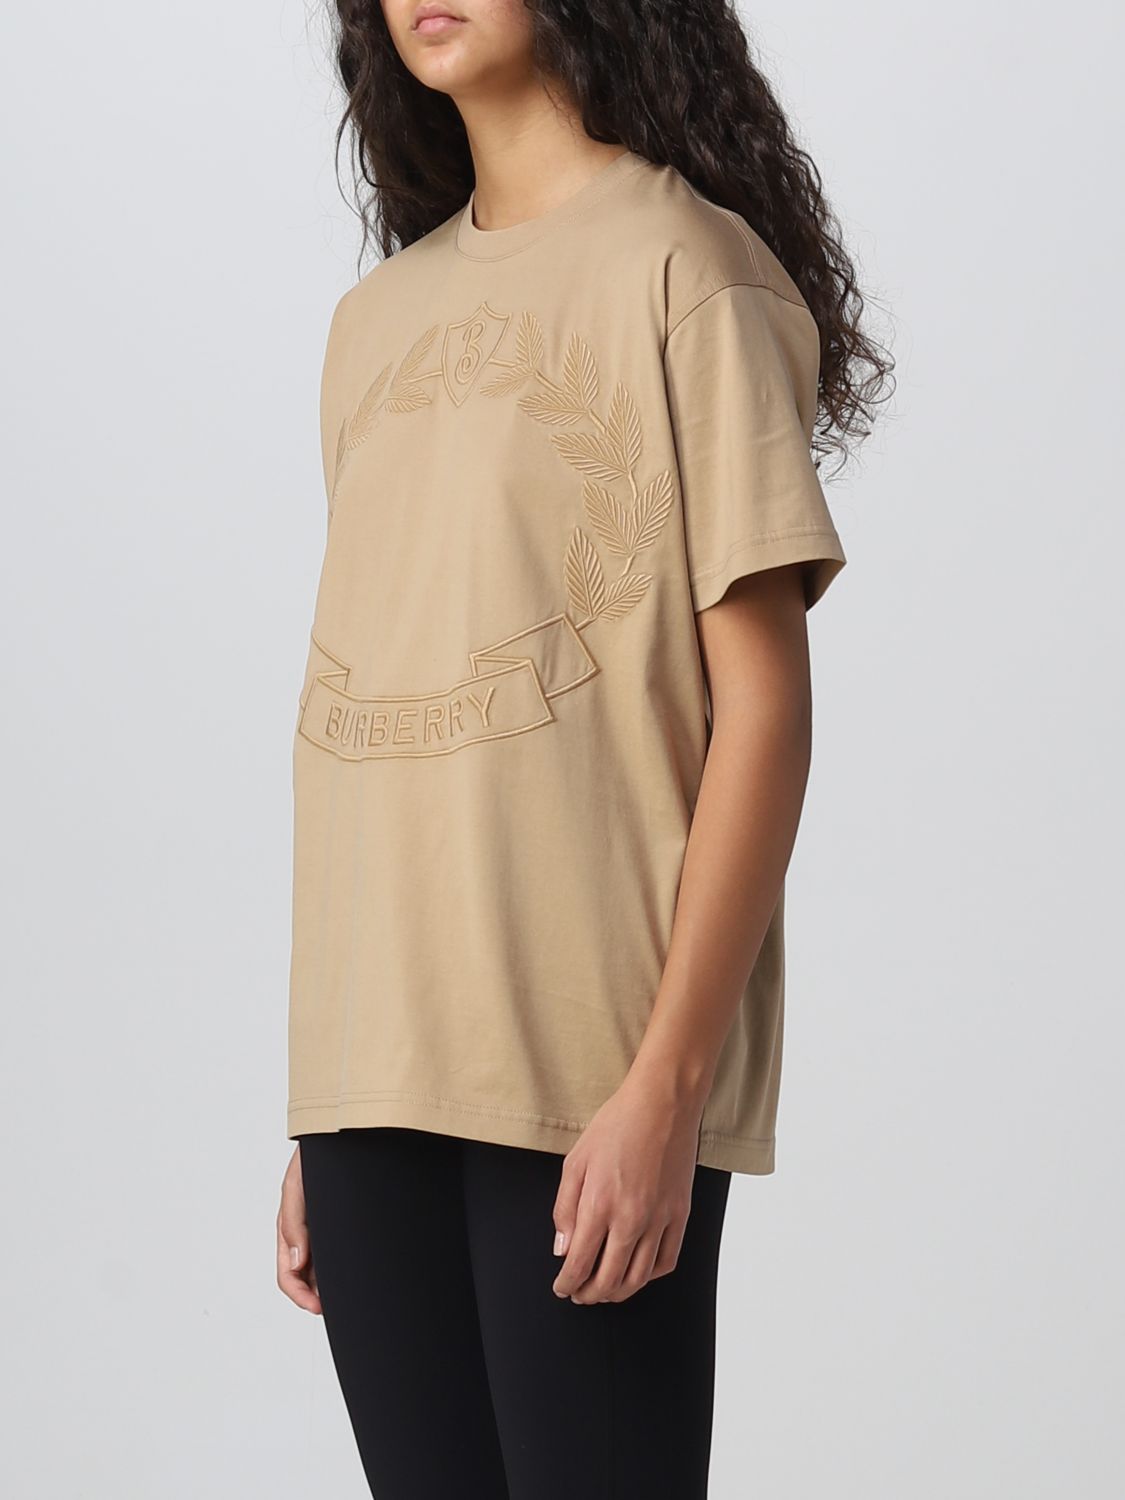 BURBERRY: Camiseta para mujer, Gris | Camiseta Burberry 8065254 en línea en  